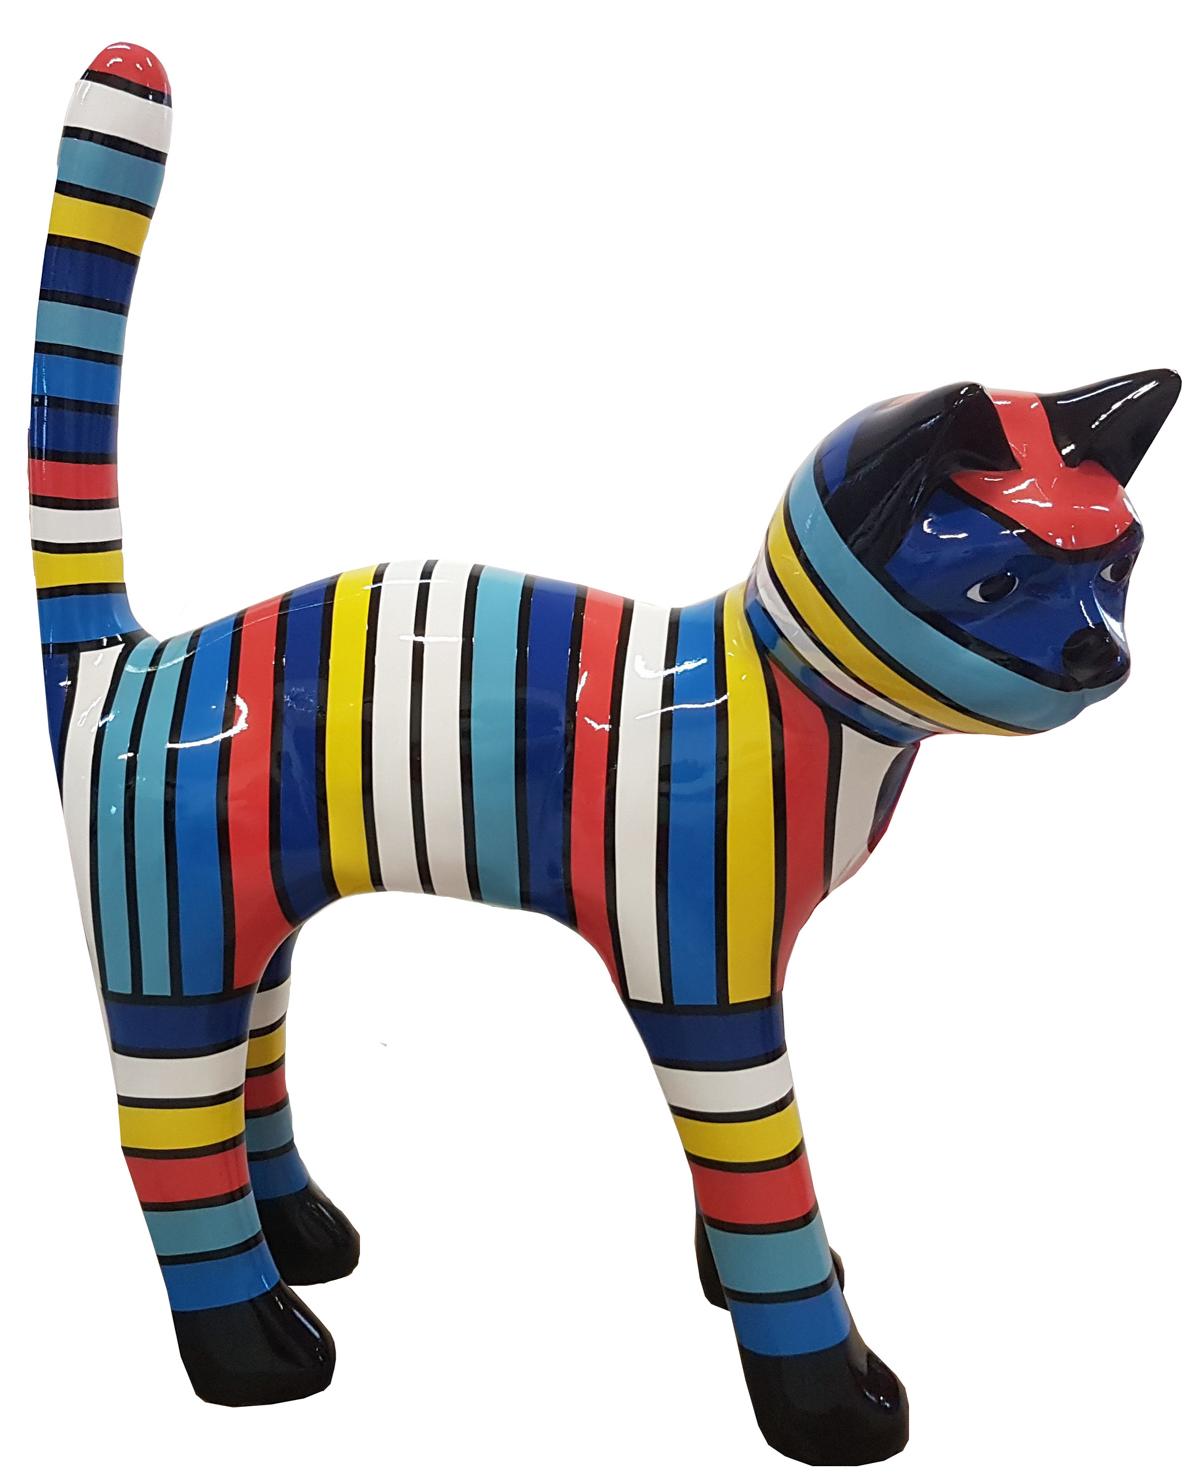 Perfekt designte abstrakte Katzenskulpturen: Moderne Figuren